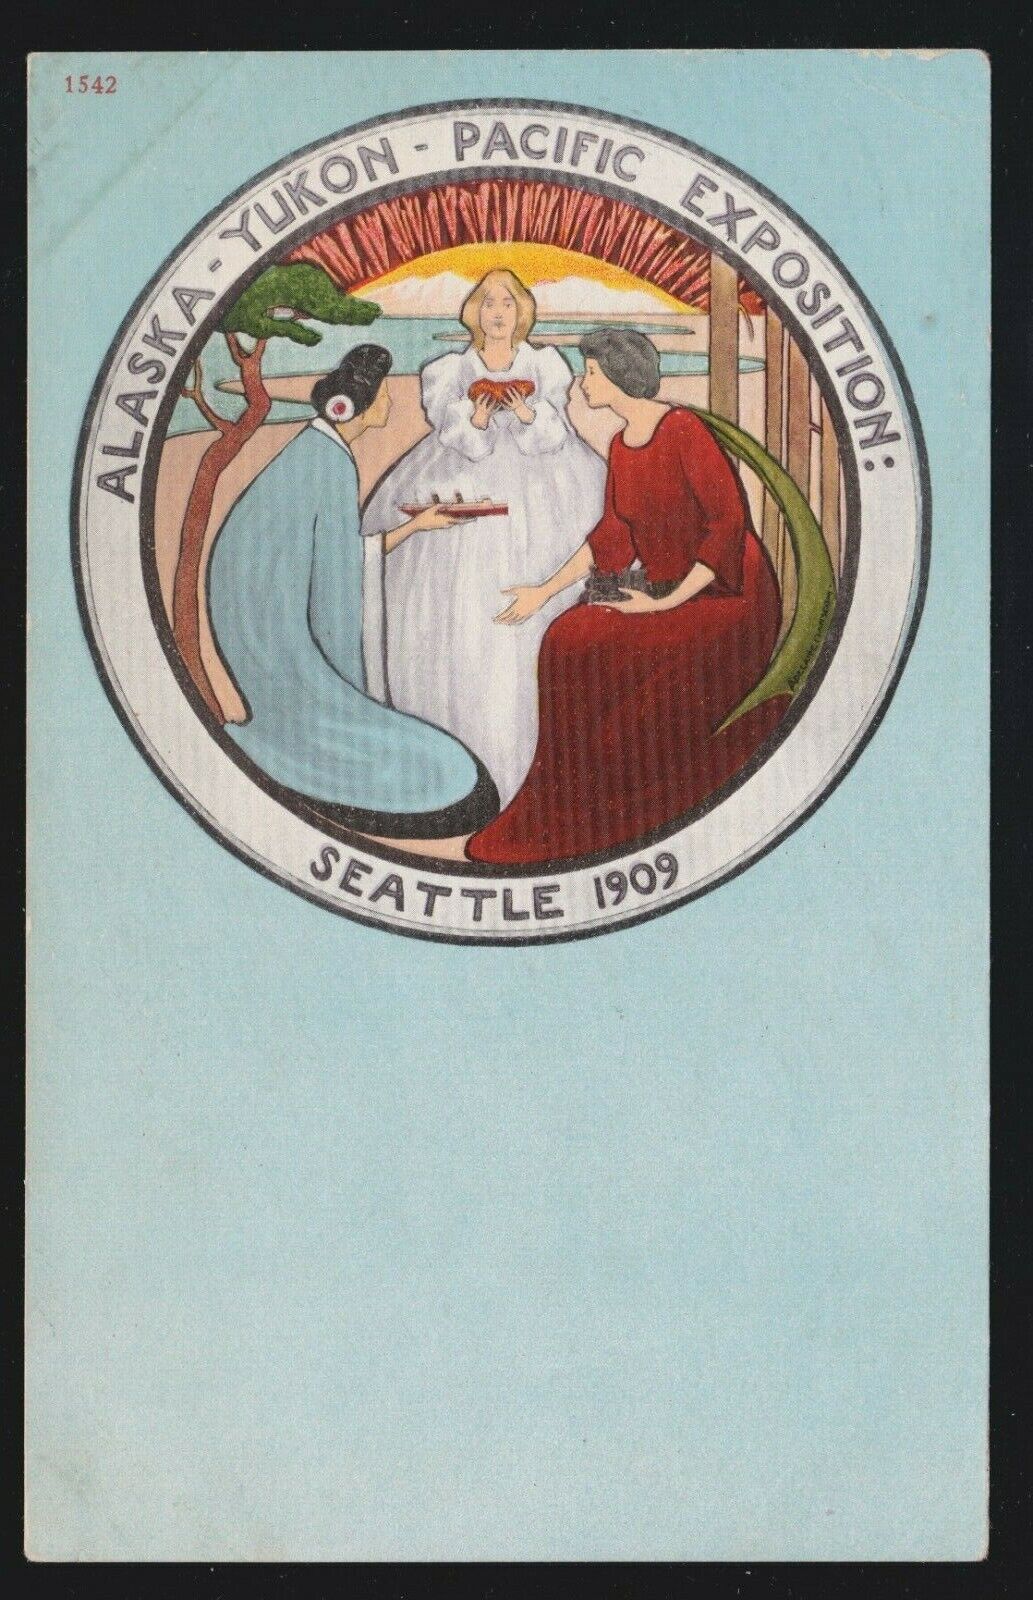 US 1909 Alaska Yukon Pacific Exposition Used Post Card w/ Worlds Fair Cancel (2)